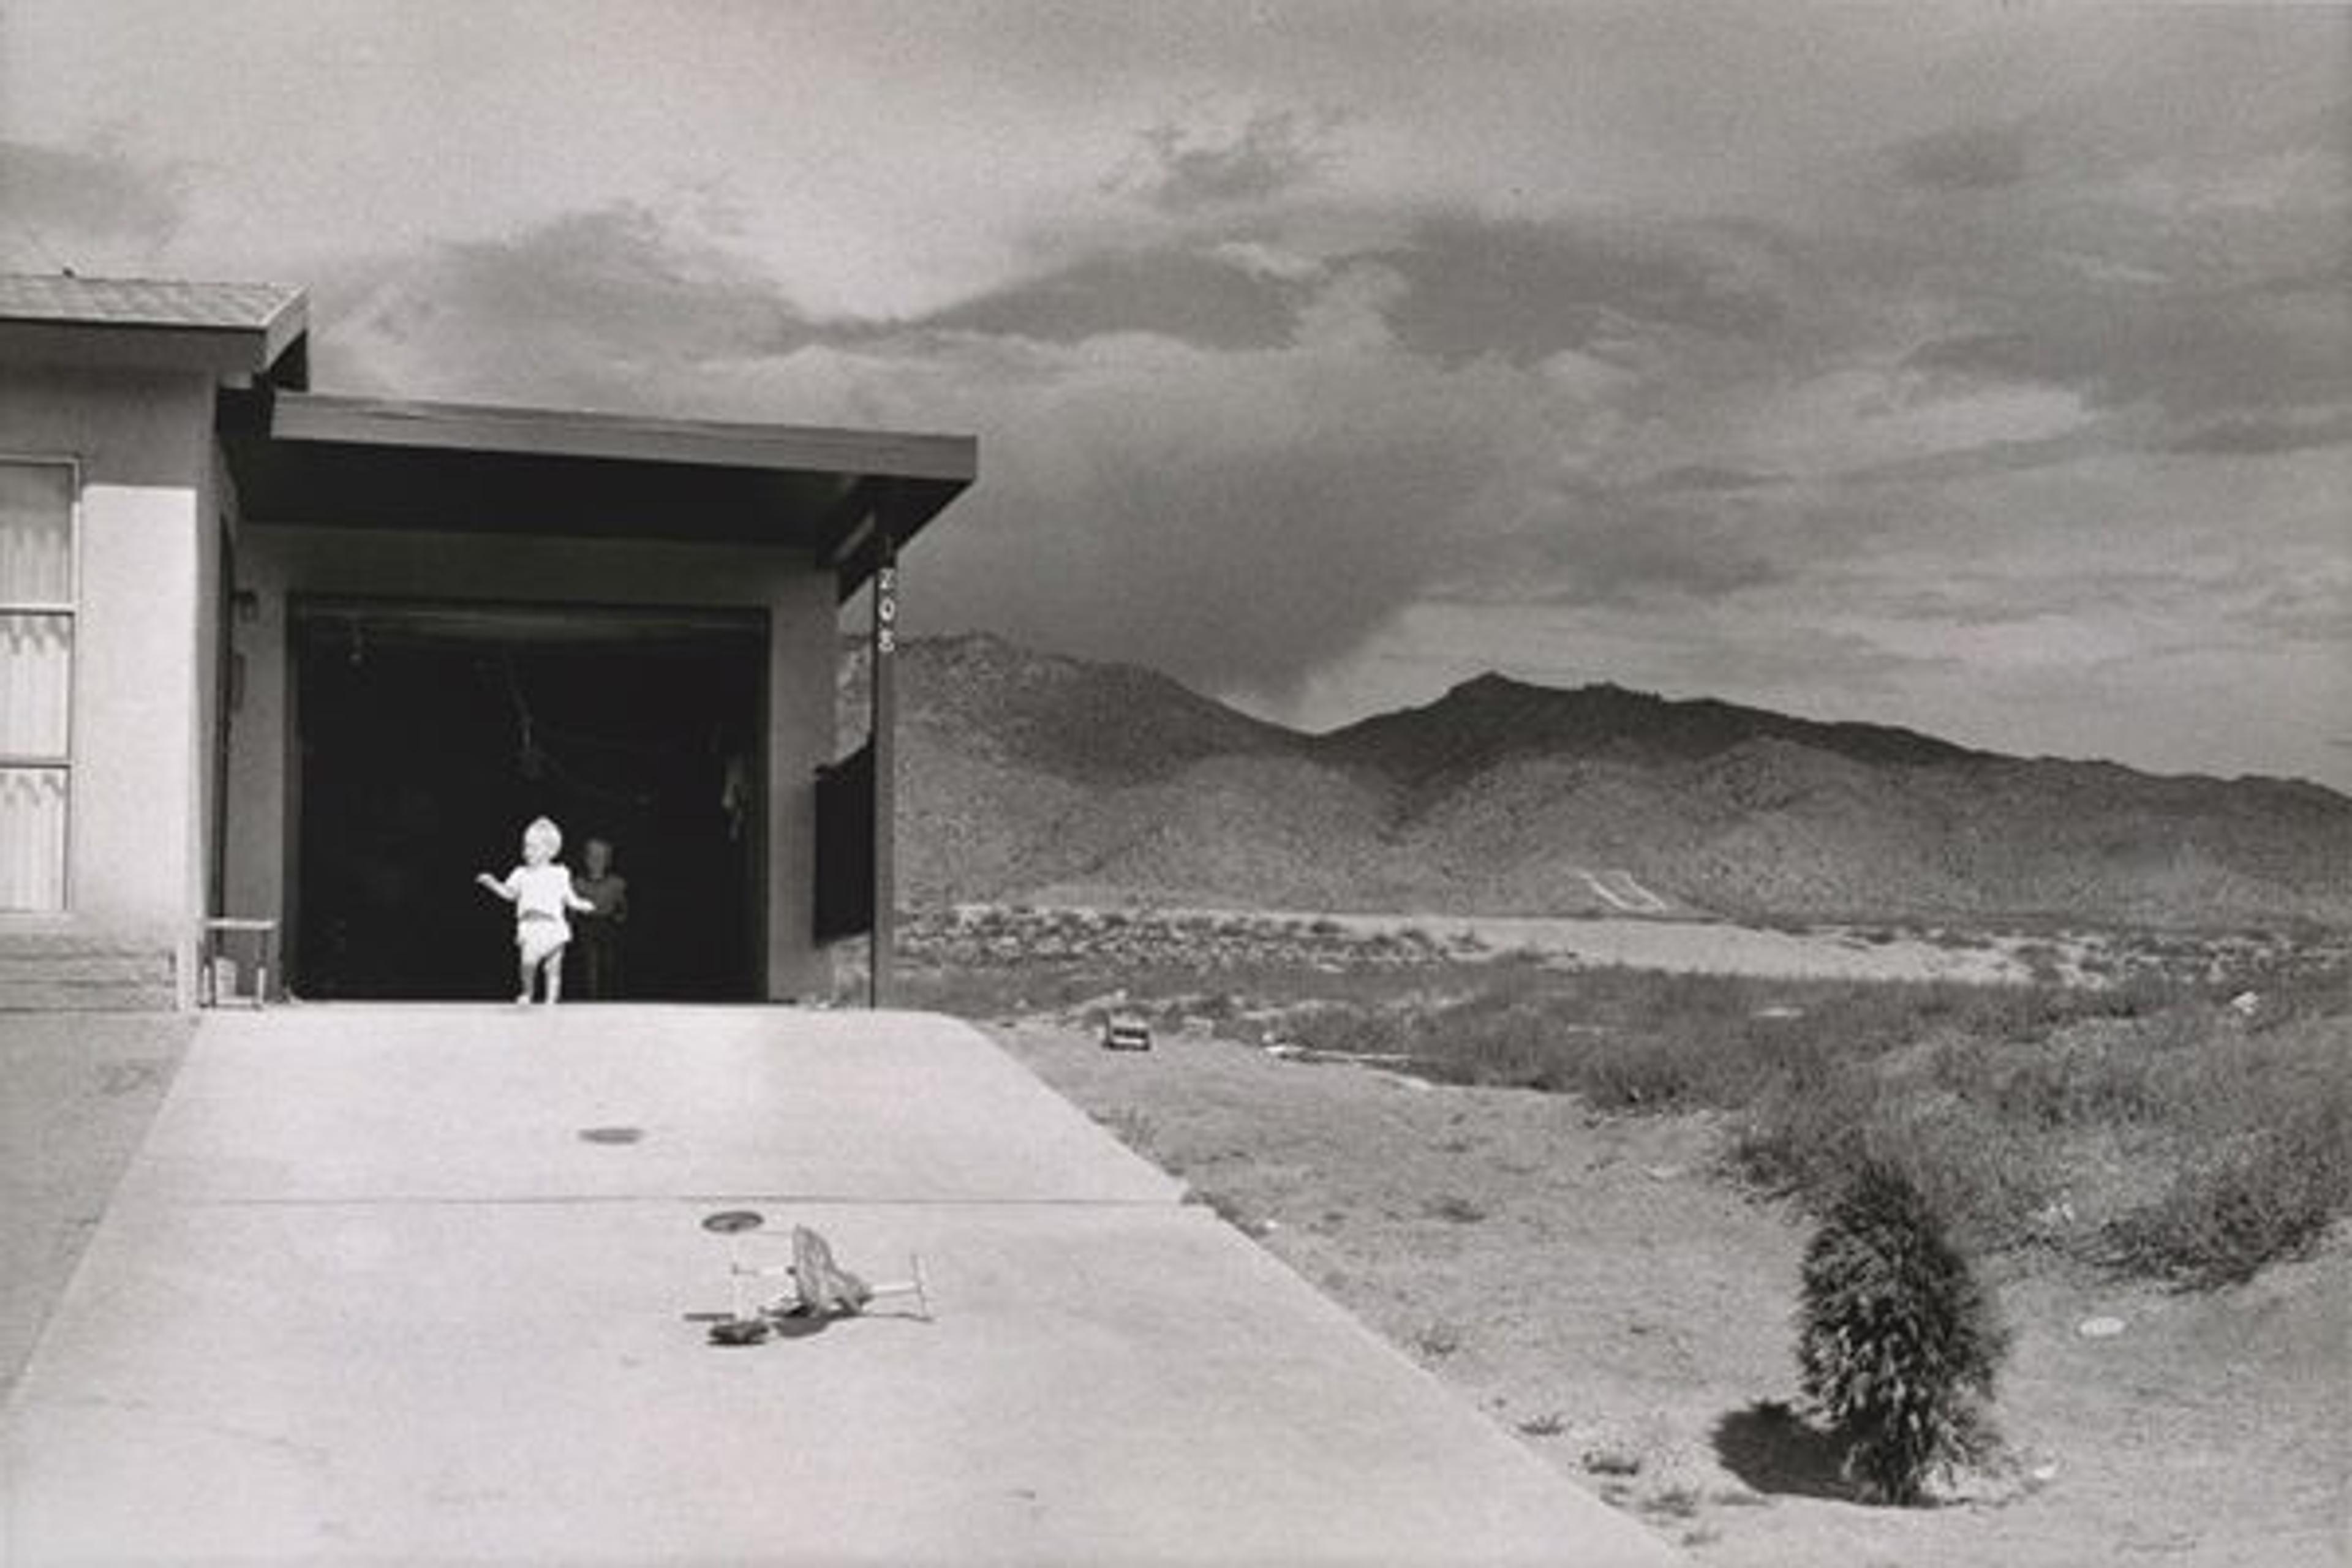 Garry Winogrand (American, 1928–1984). Albuquerque, 1957. Gelatin silver print. The Museum of Modern Art, New York, Purchase